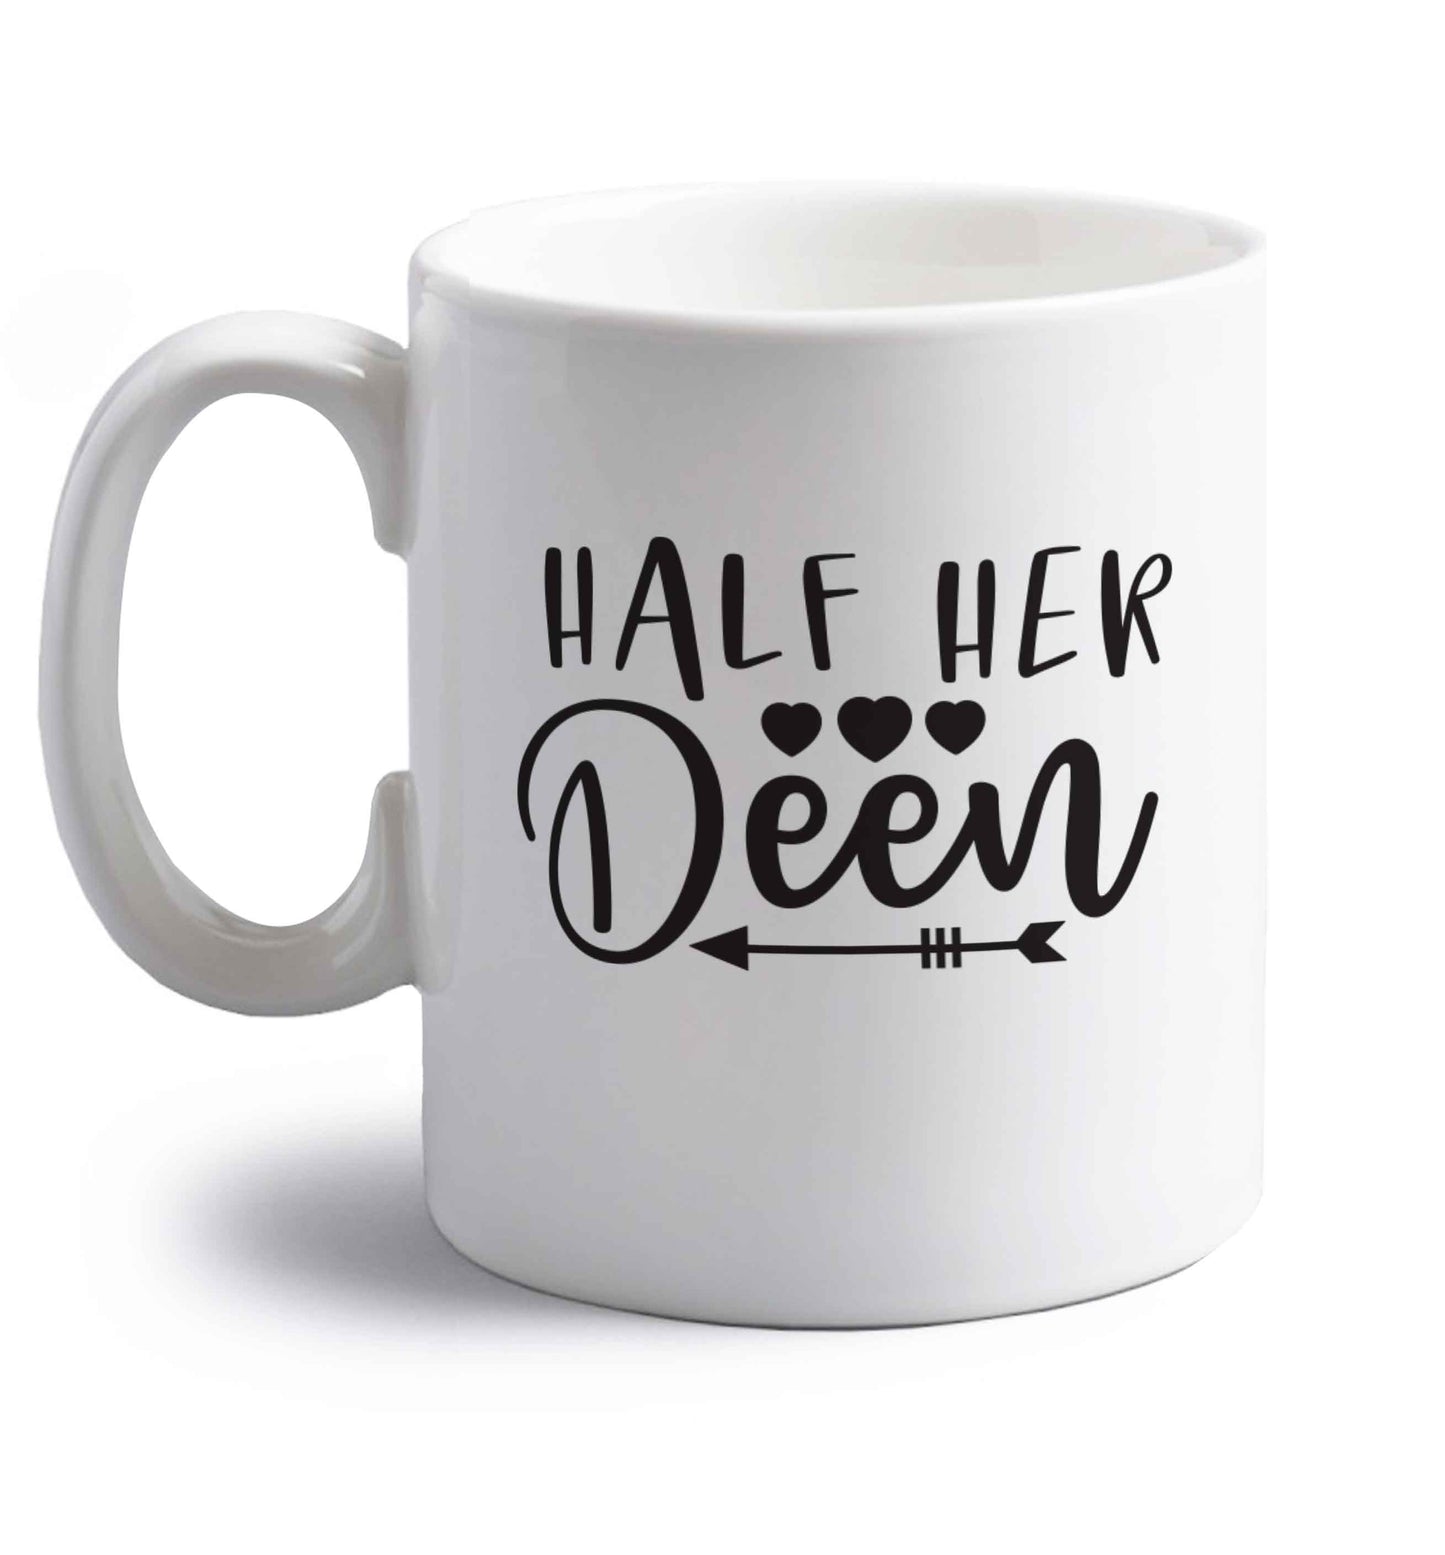 Half her deen right handed white ceramic mug 